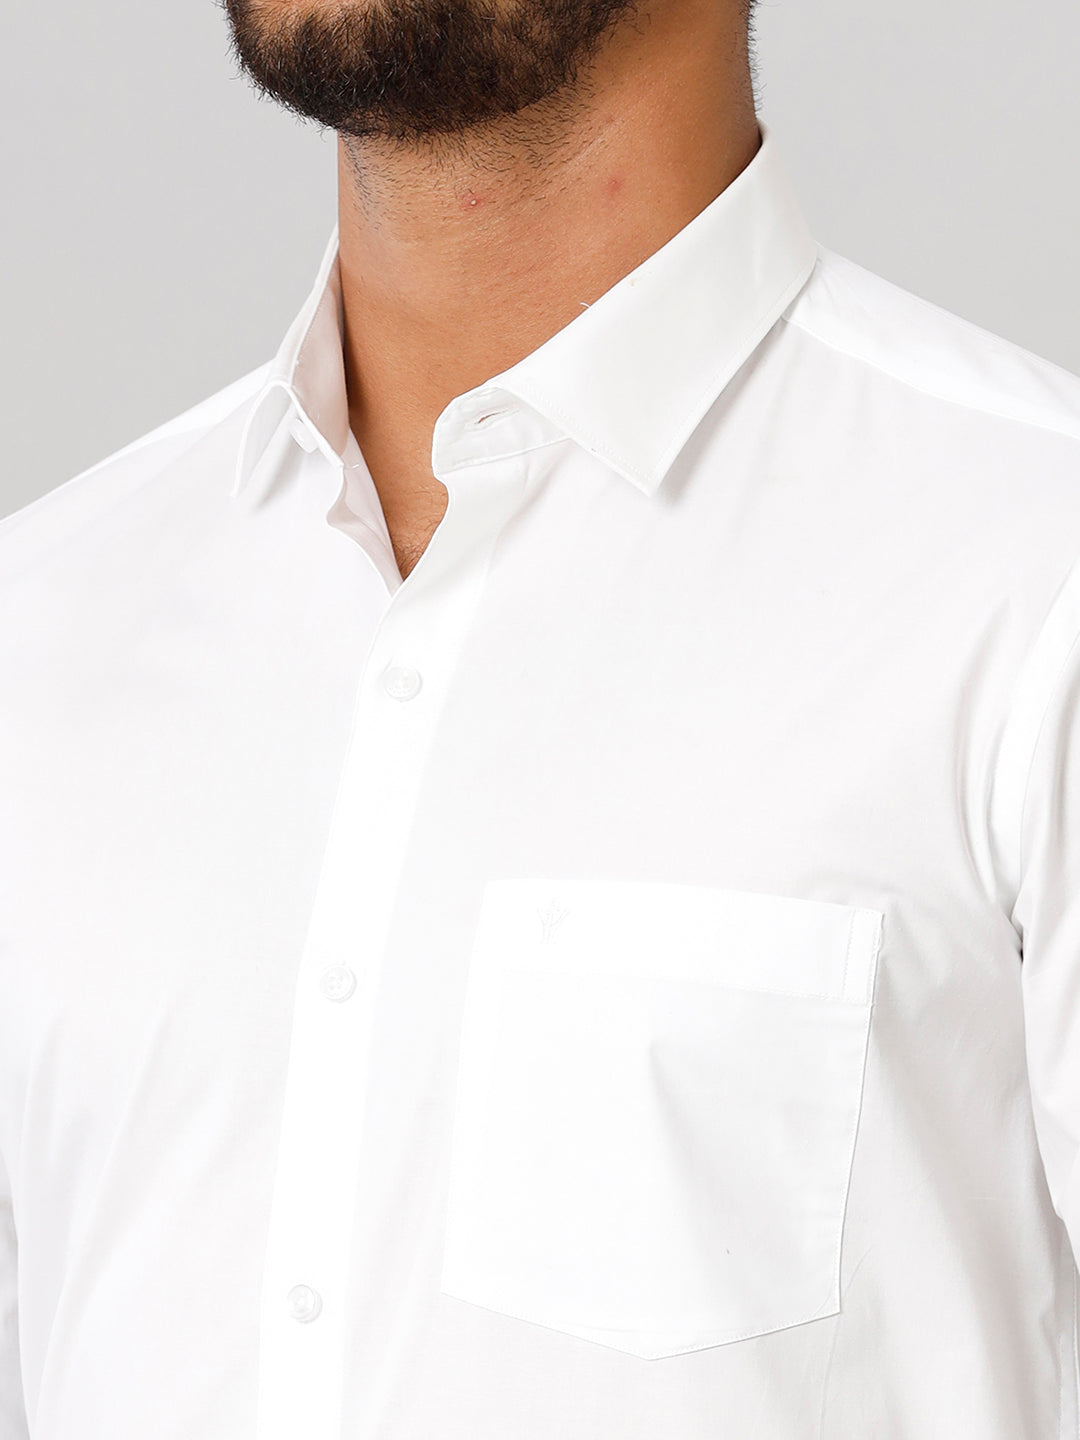 Mens Uniform Linen Cotton White Shirt Full Sleeves-Zoom view